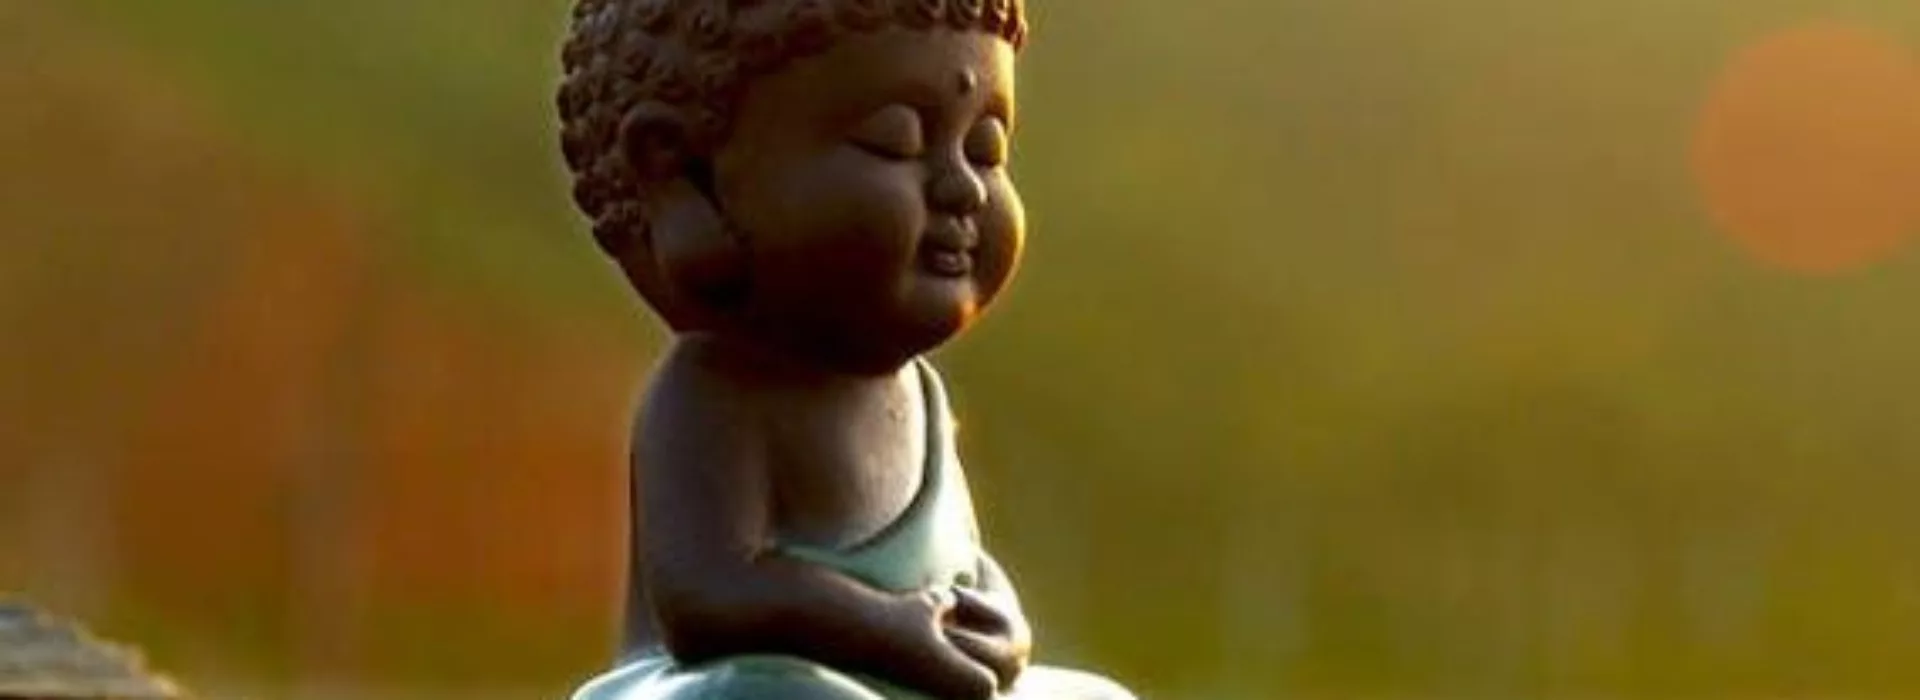 boudha zen petit calme joyeux paix